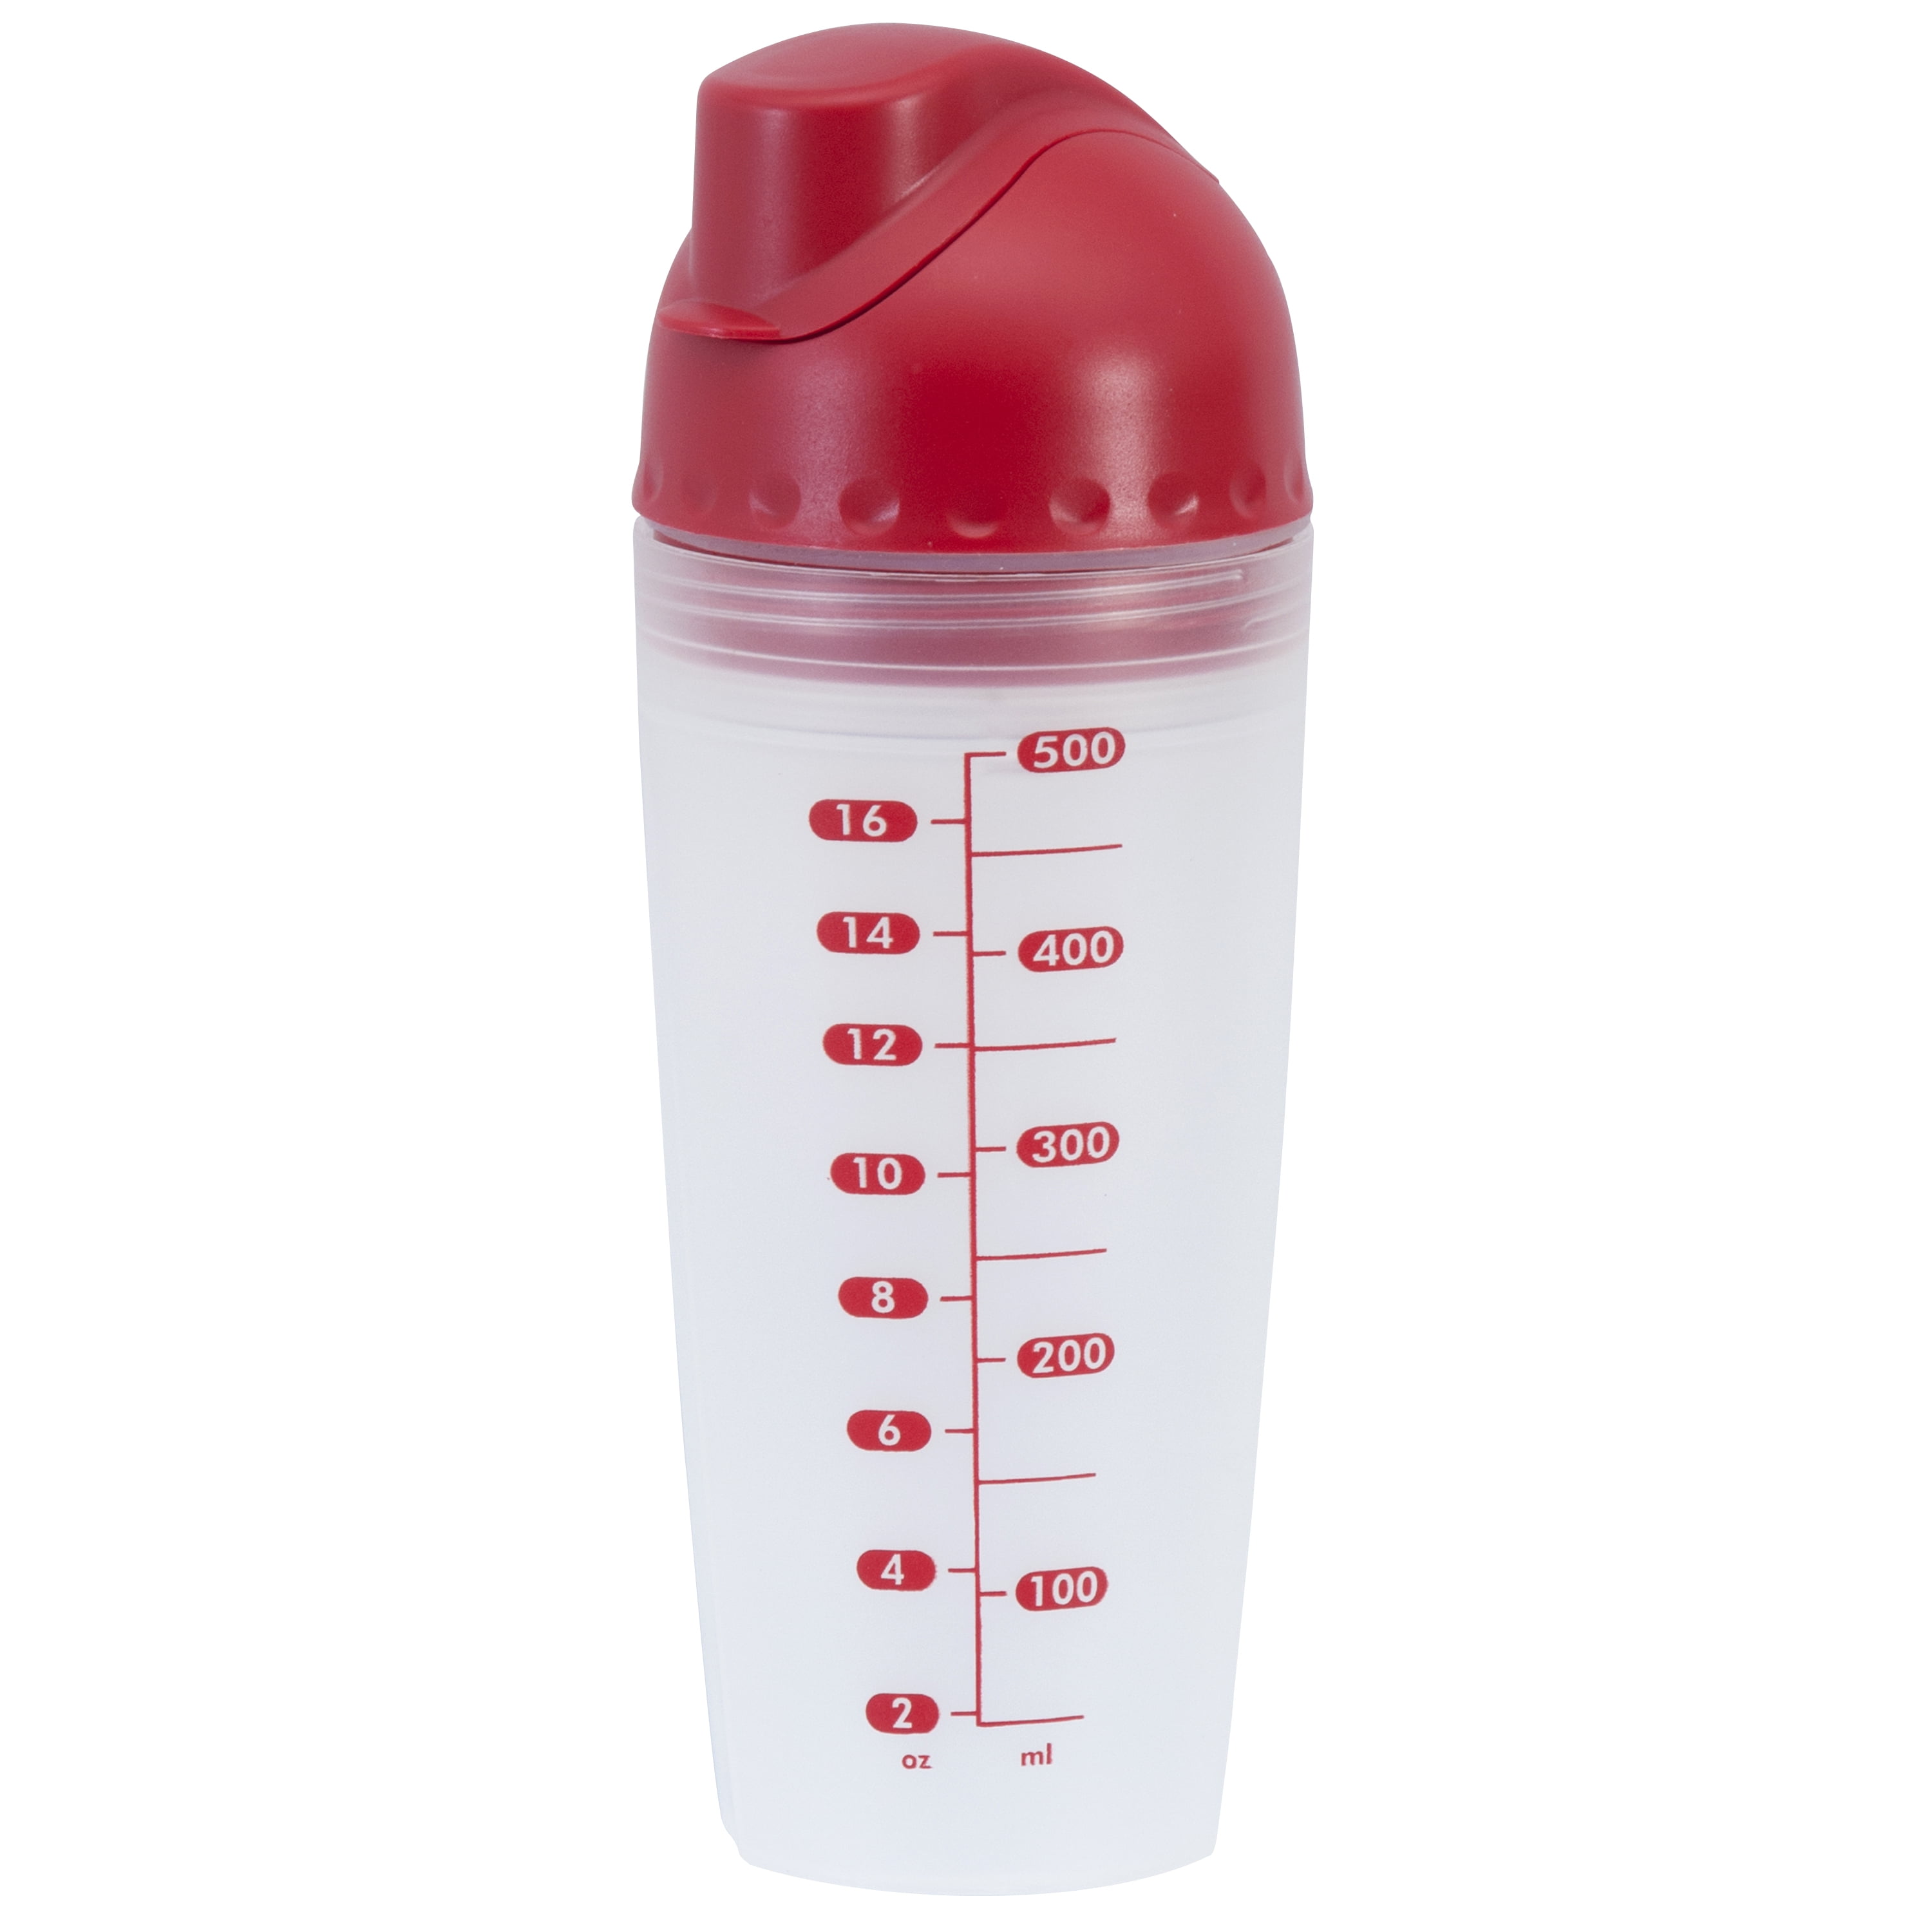 Red Shake Bottle - Walmart.com